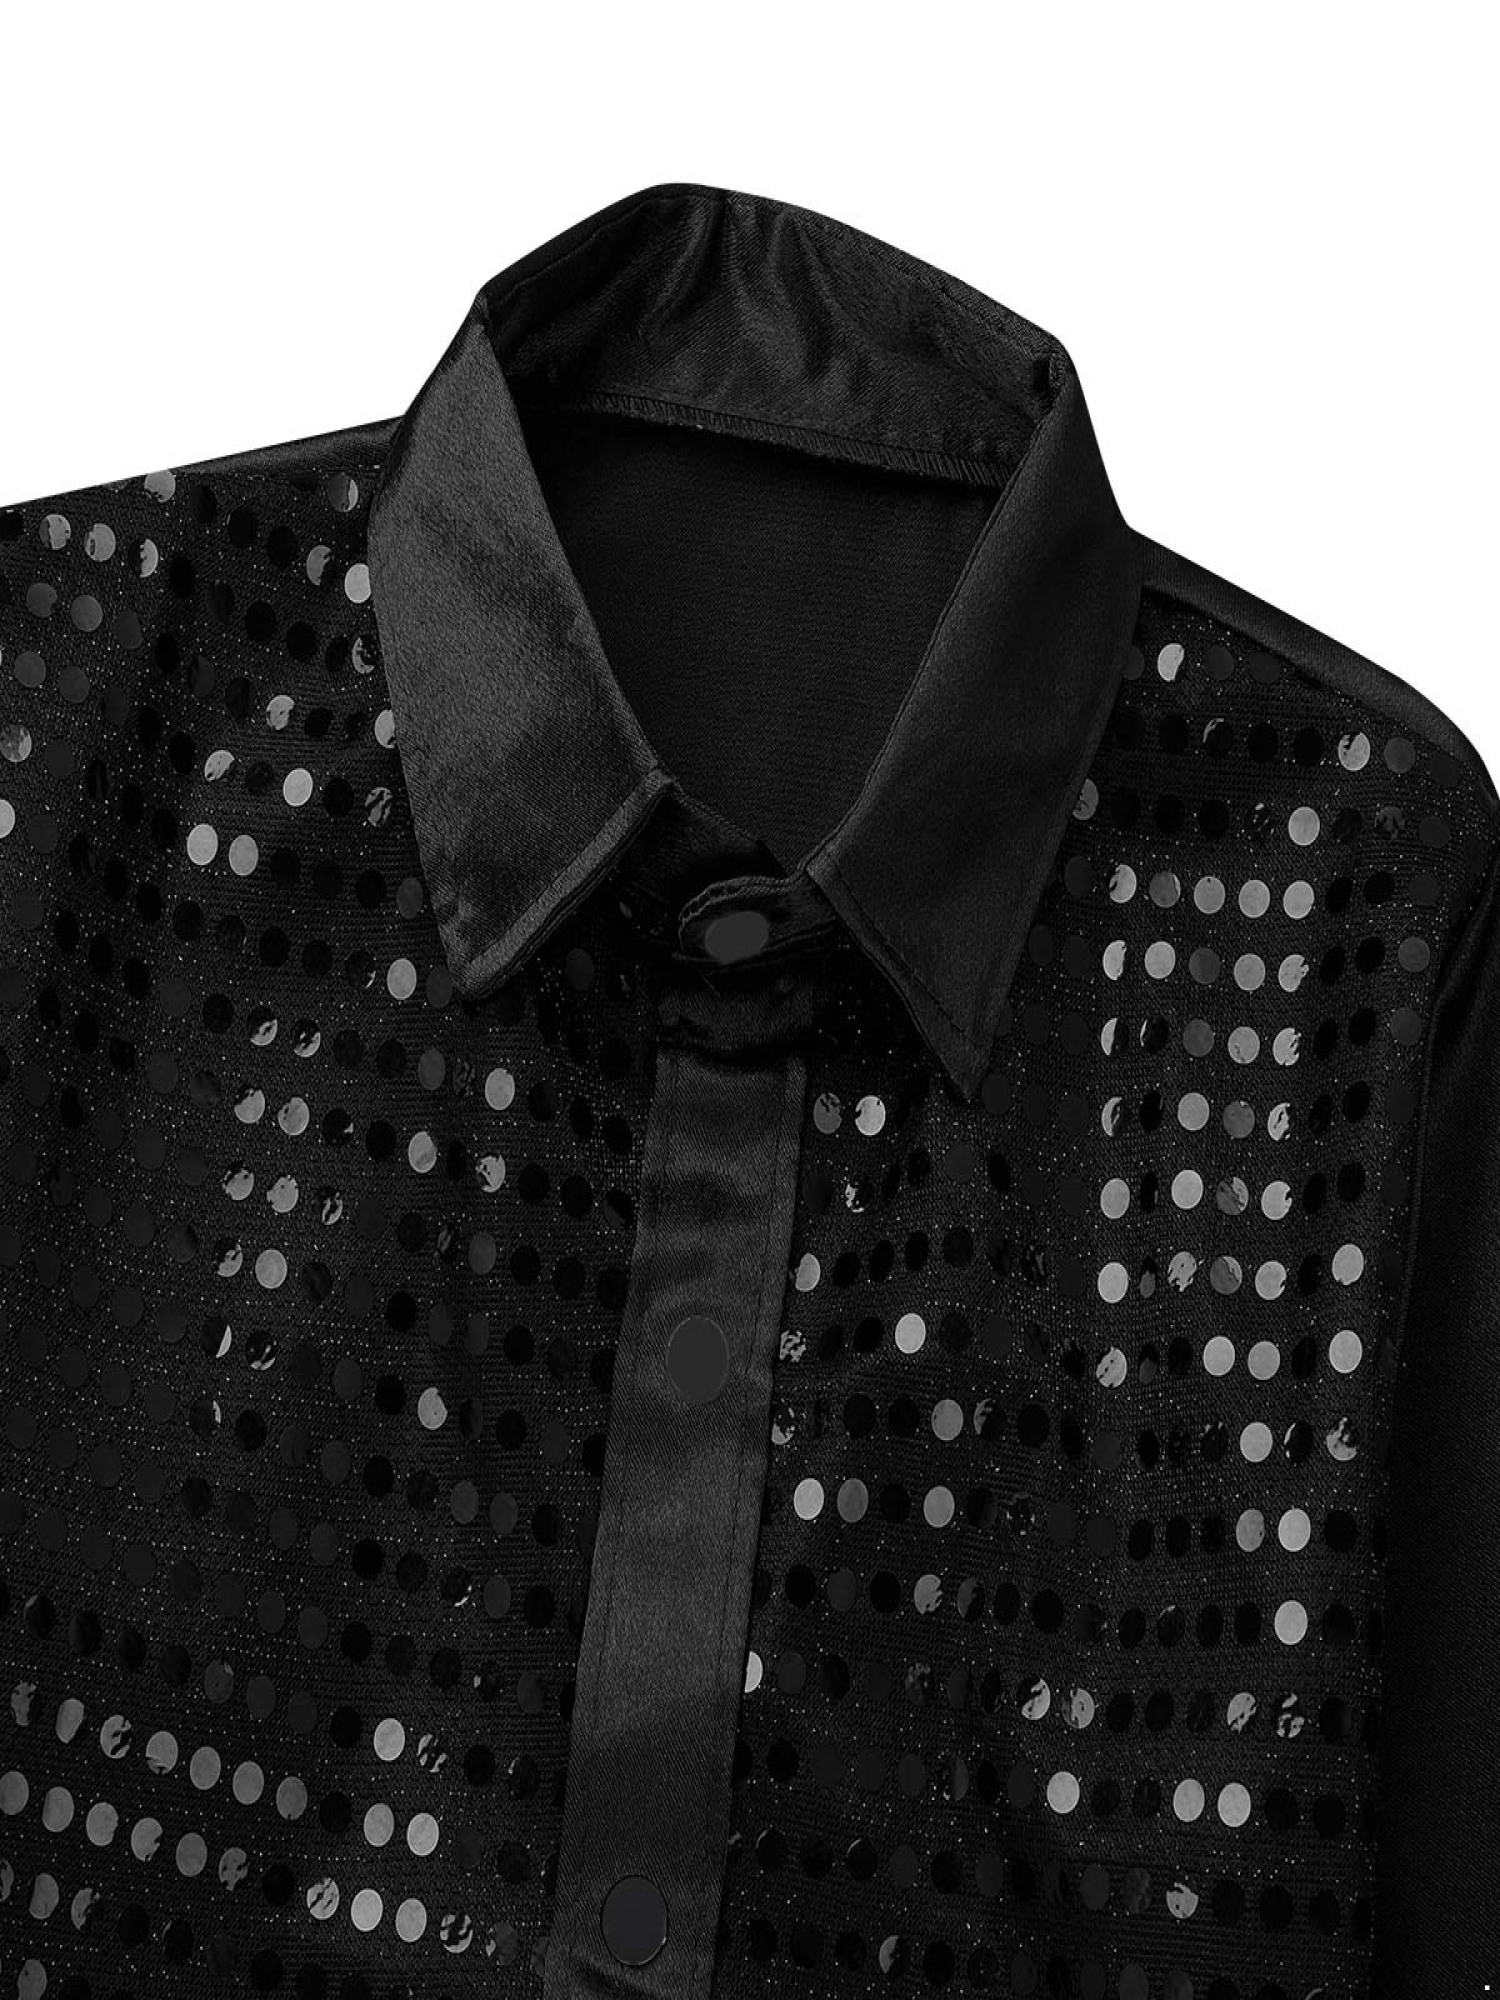 YEAHDOR Kids Boys Sparkly Sequins Lapel Collar Shirt Long Sleeve Tops for Jazz Latin Dance Performance Black 7-8 - image 3 of 7